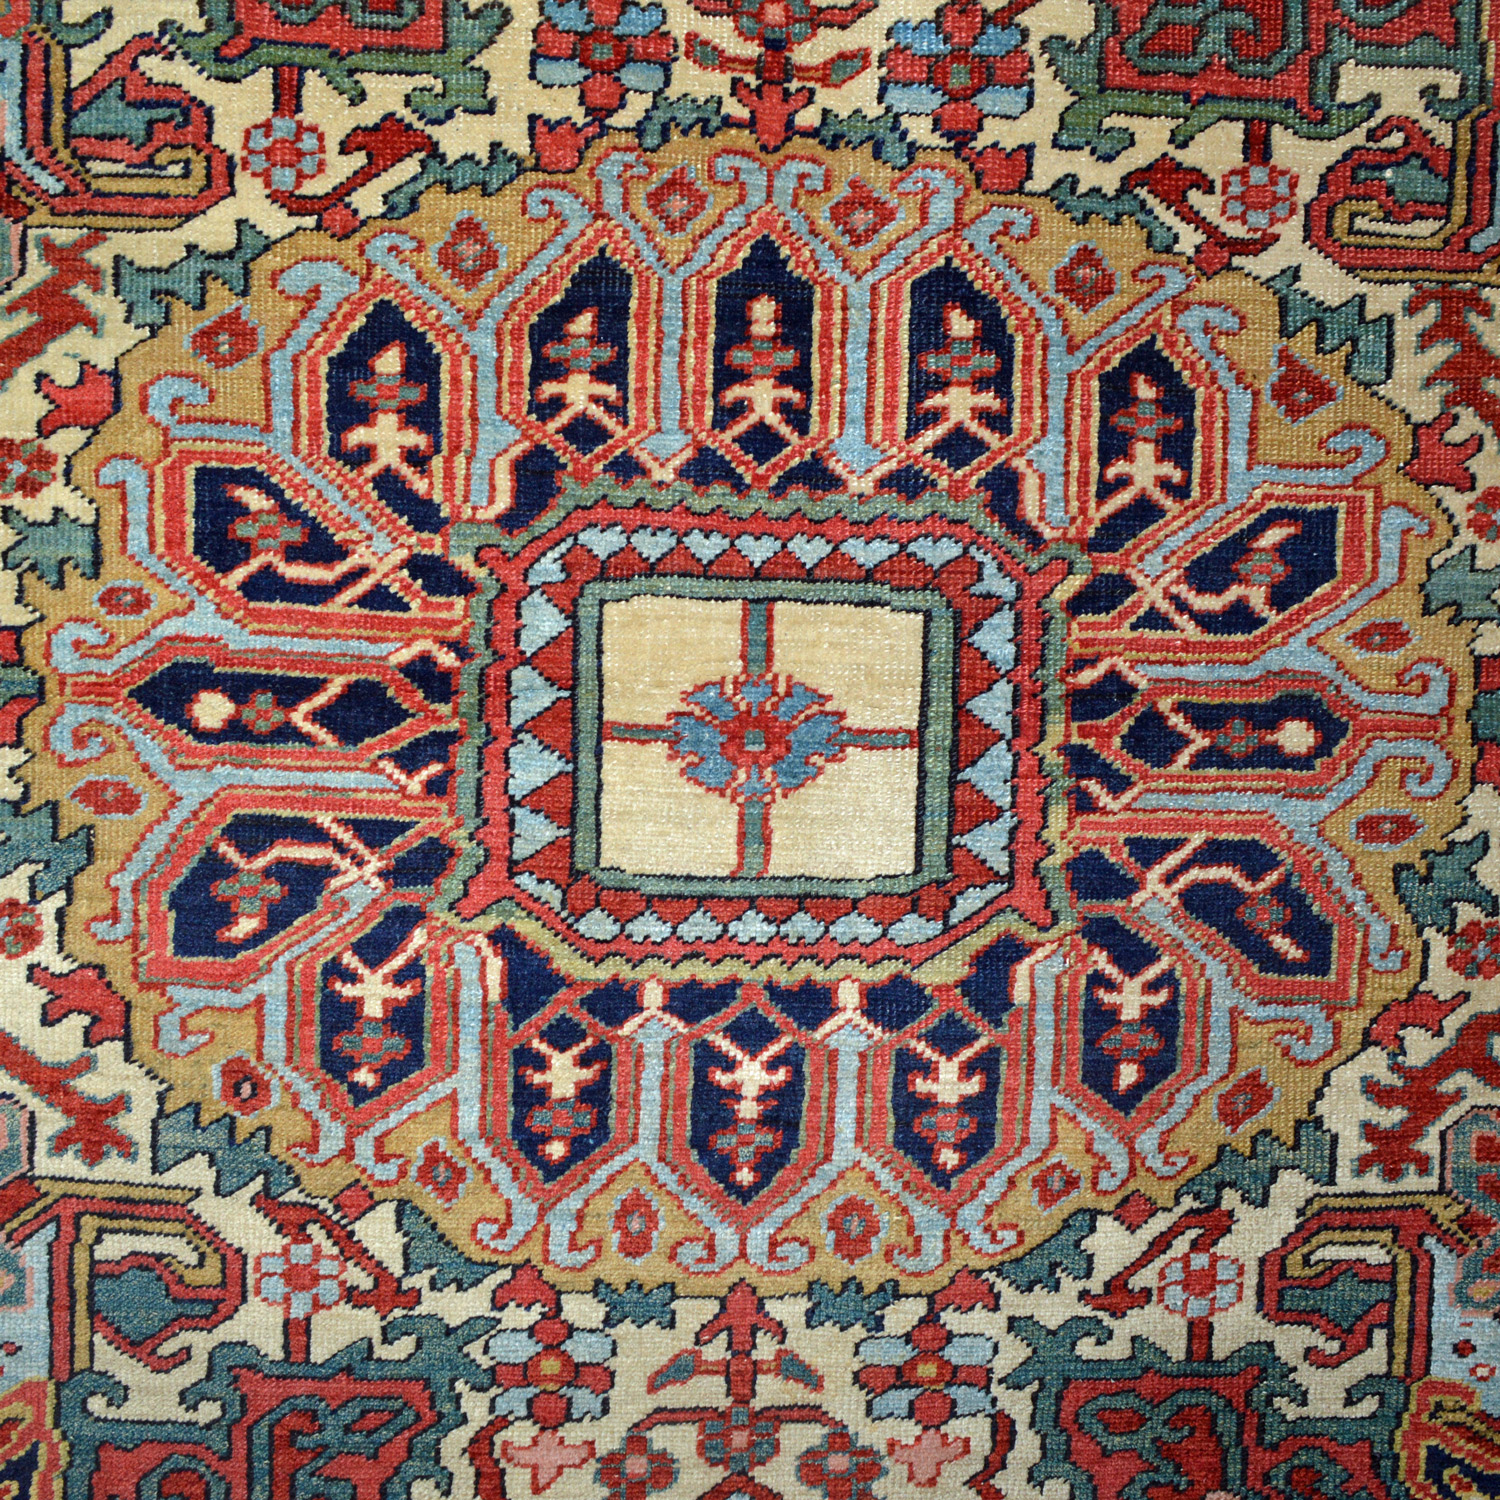 Medallion detail from an antique Persian Heriz Serapi rug